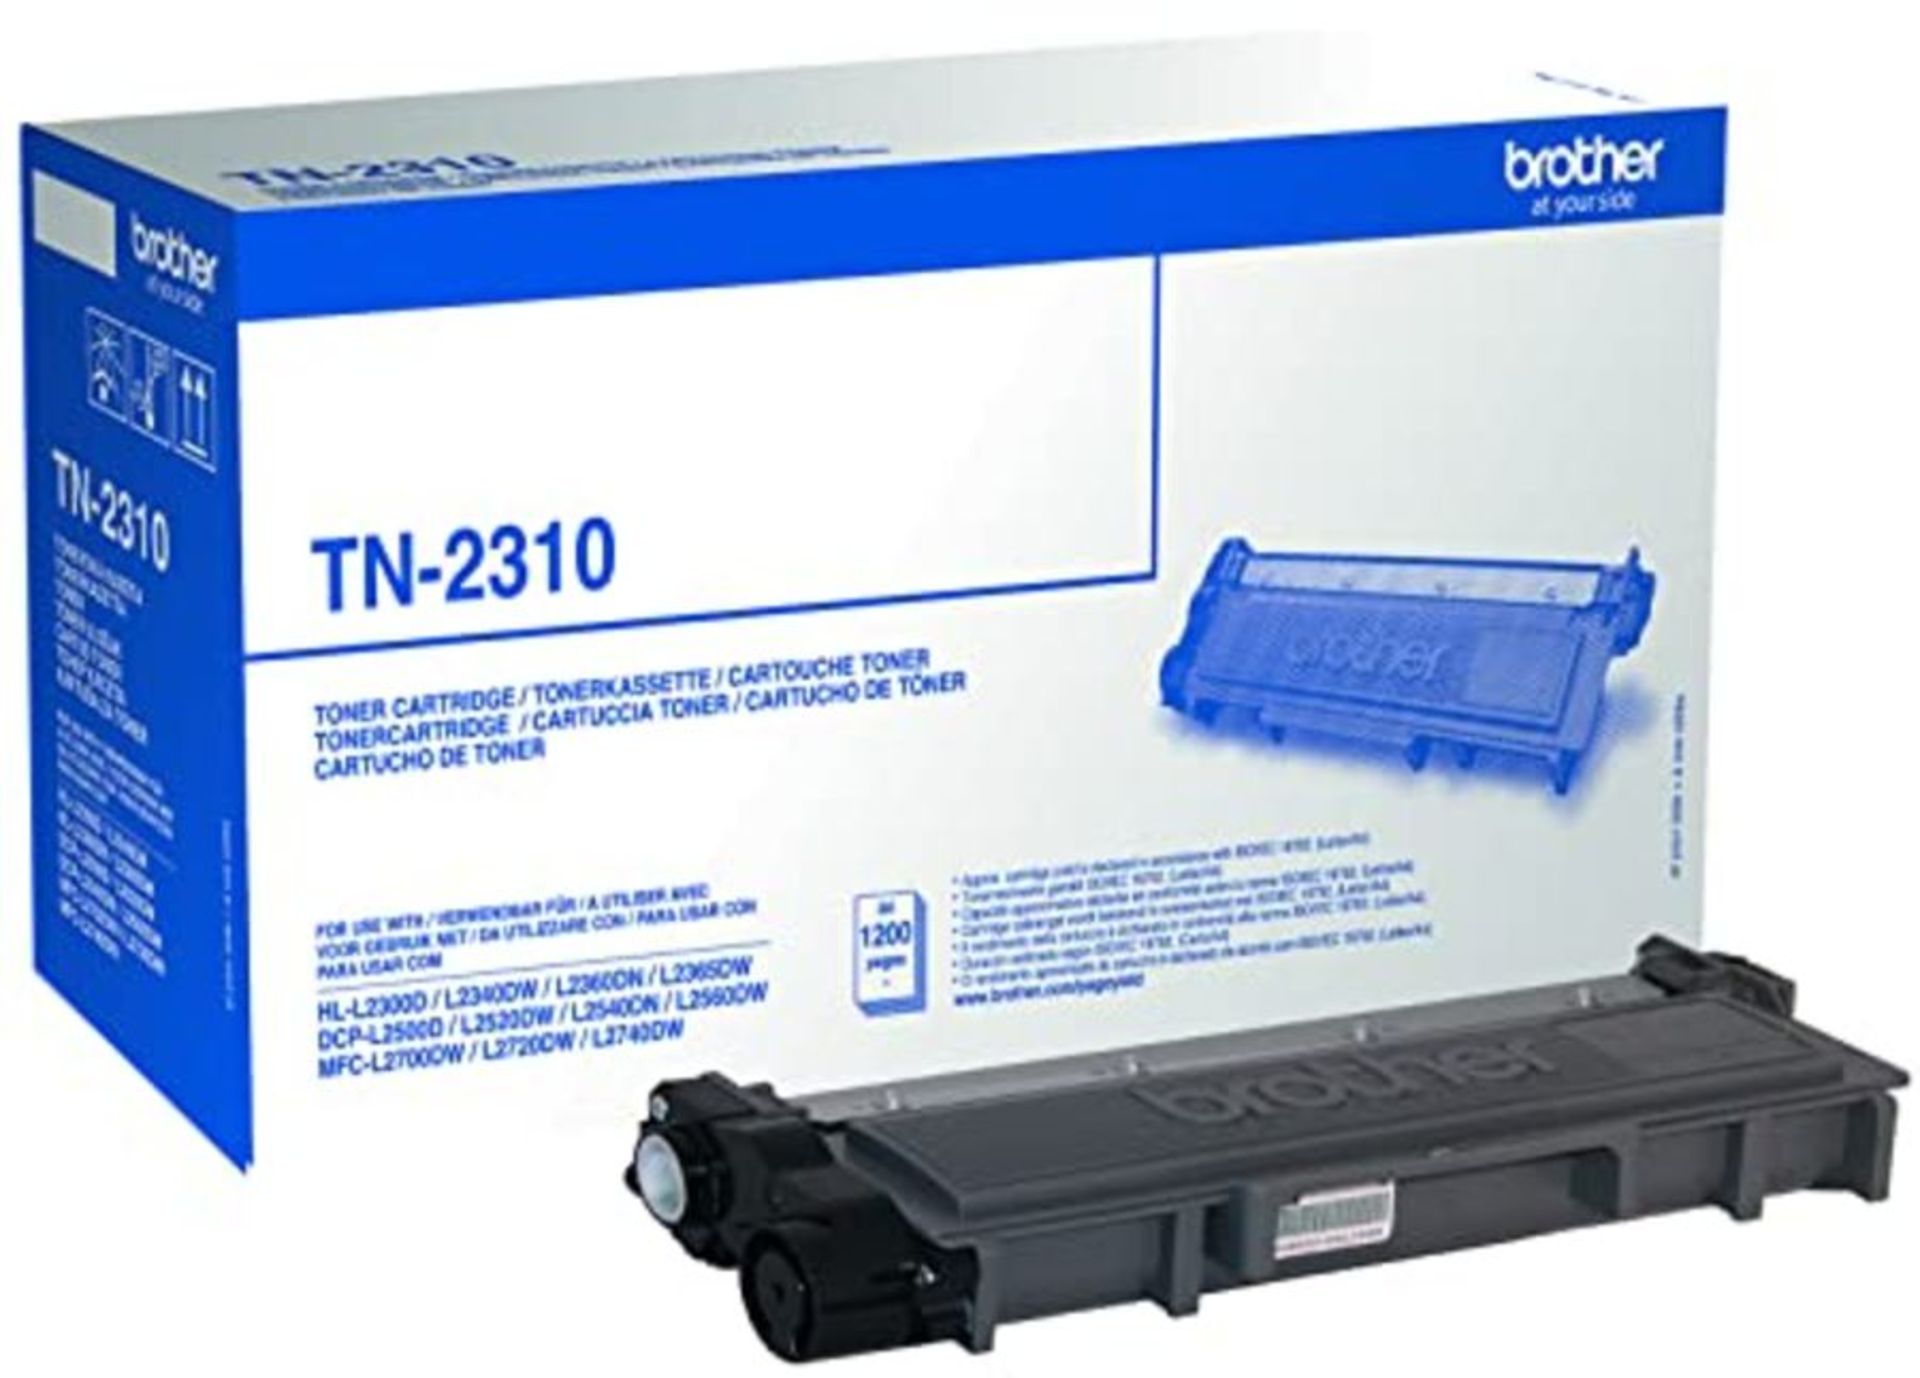 Brother TN-2310 Toner Cartridge, Black, Single Pack, Standard Yield, includes 1 x Tone